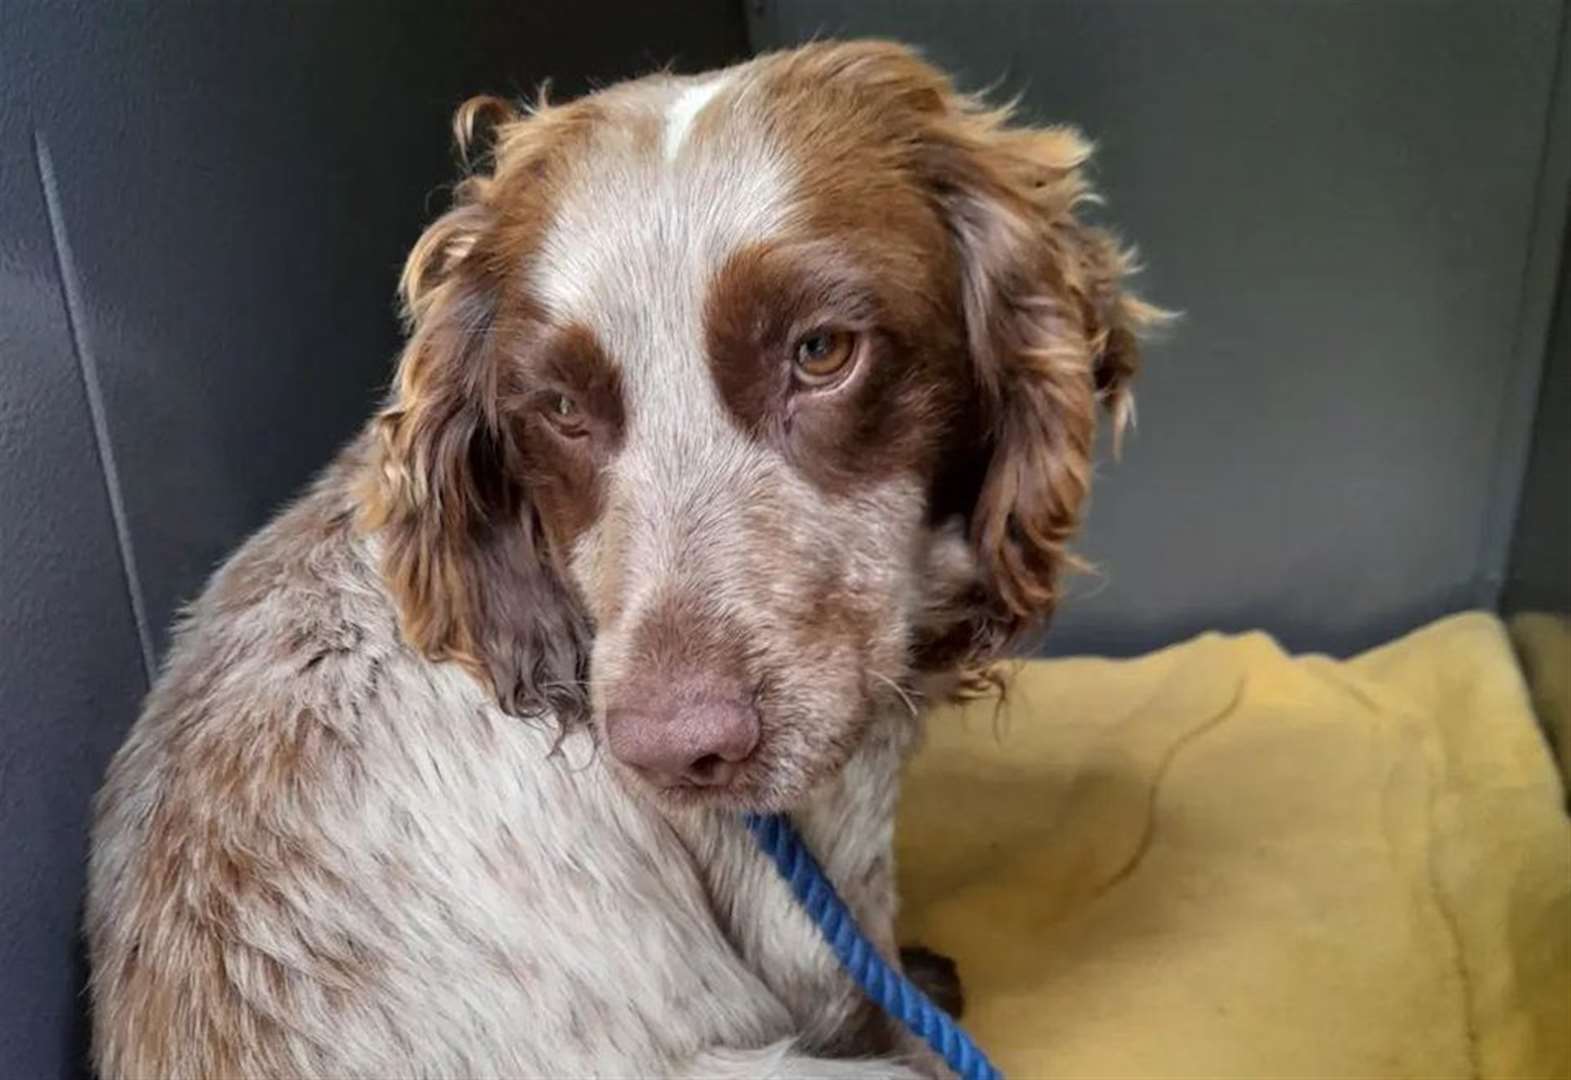 Injured dog 'thrown from car' walks again